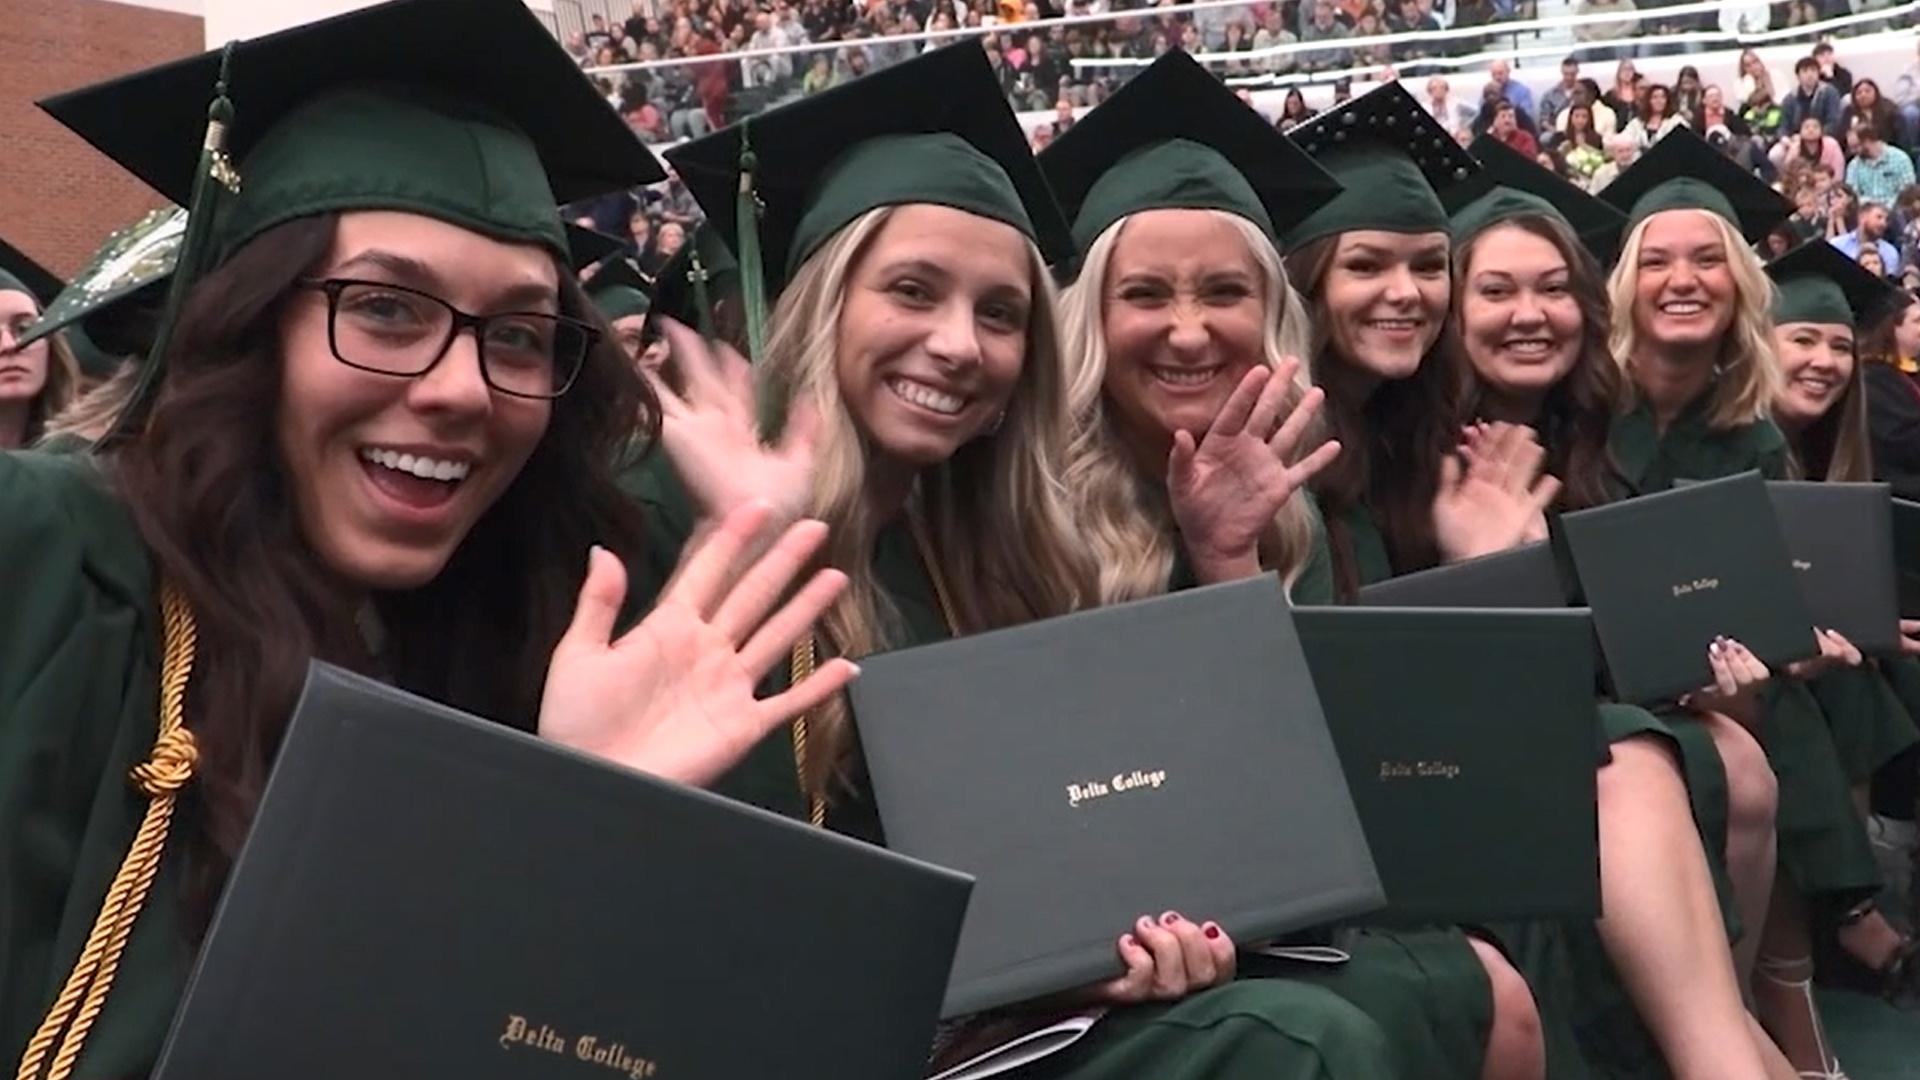 Delta College graduates waving at the camera.